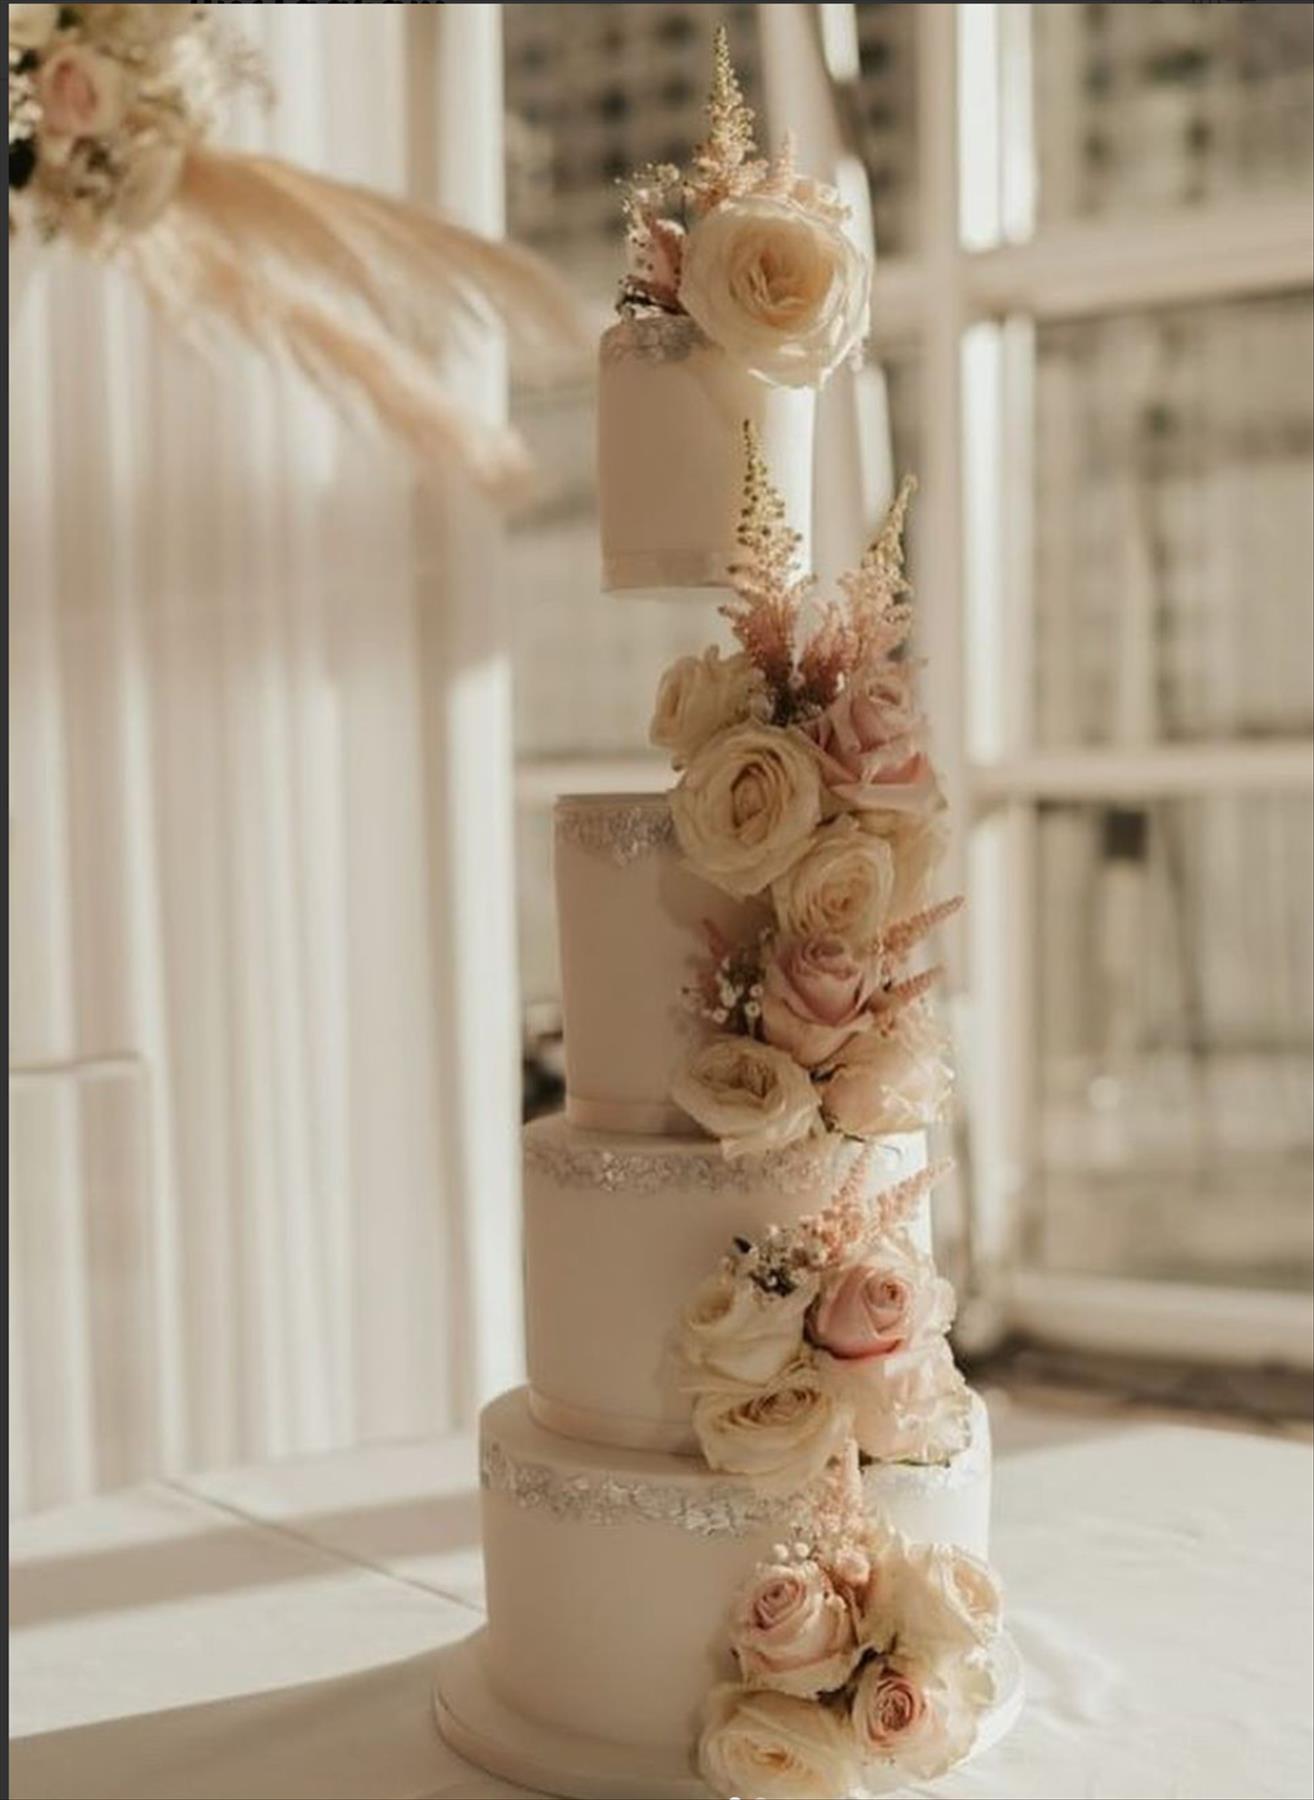 Romantic Winter wedding cakes ideas for Christmas wedding 2021